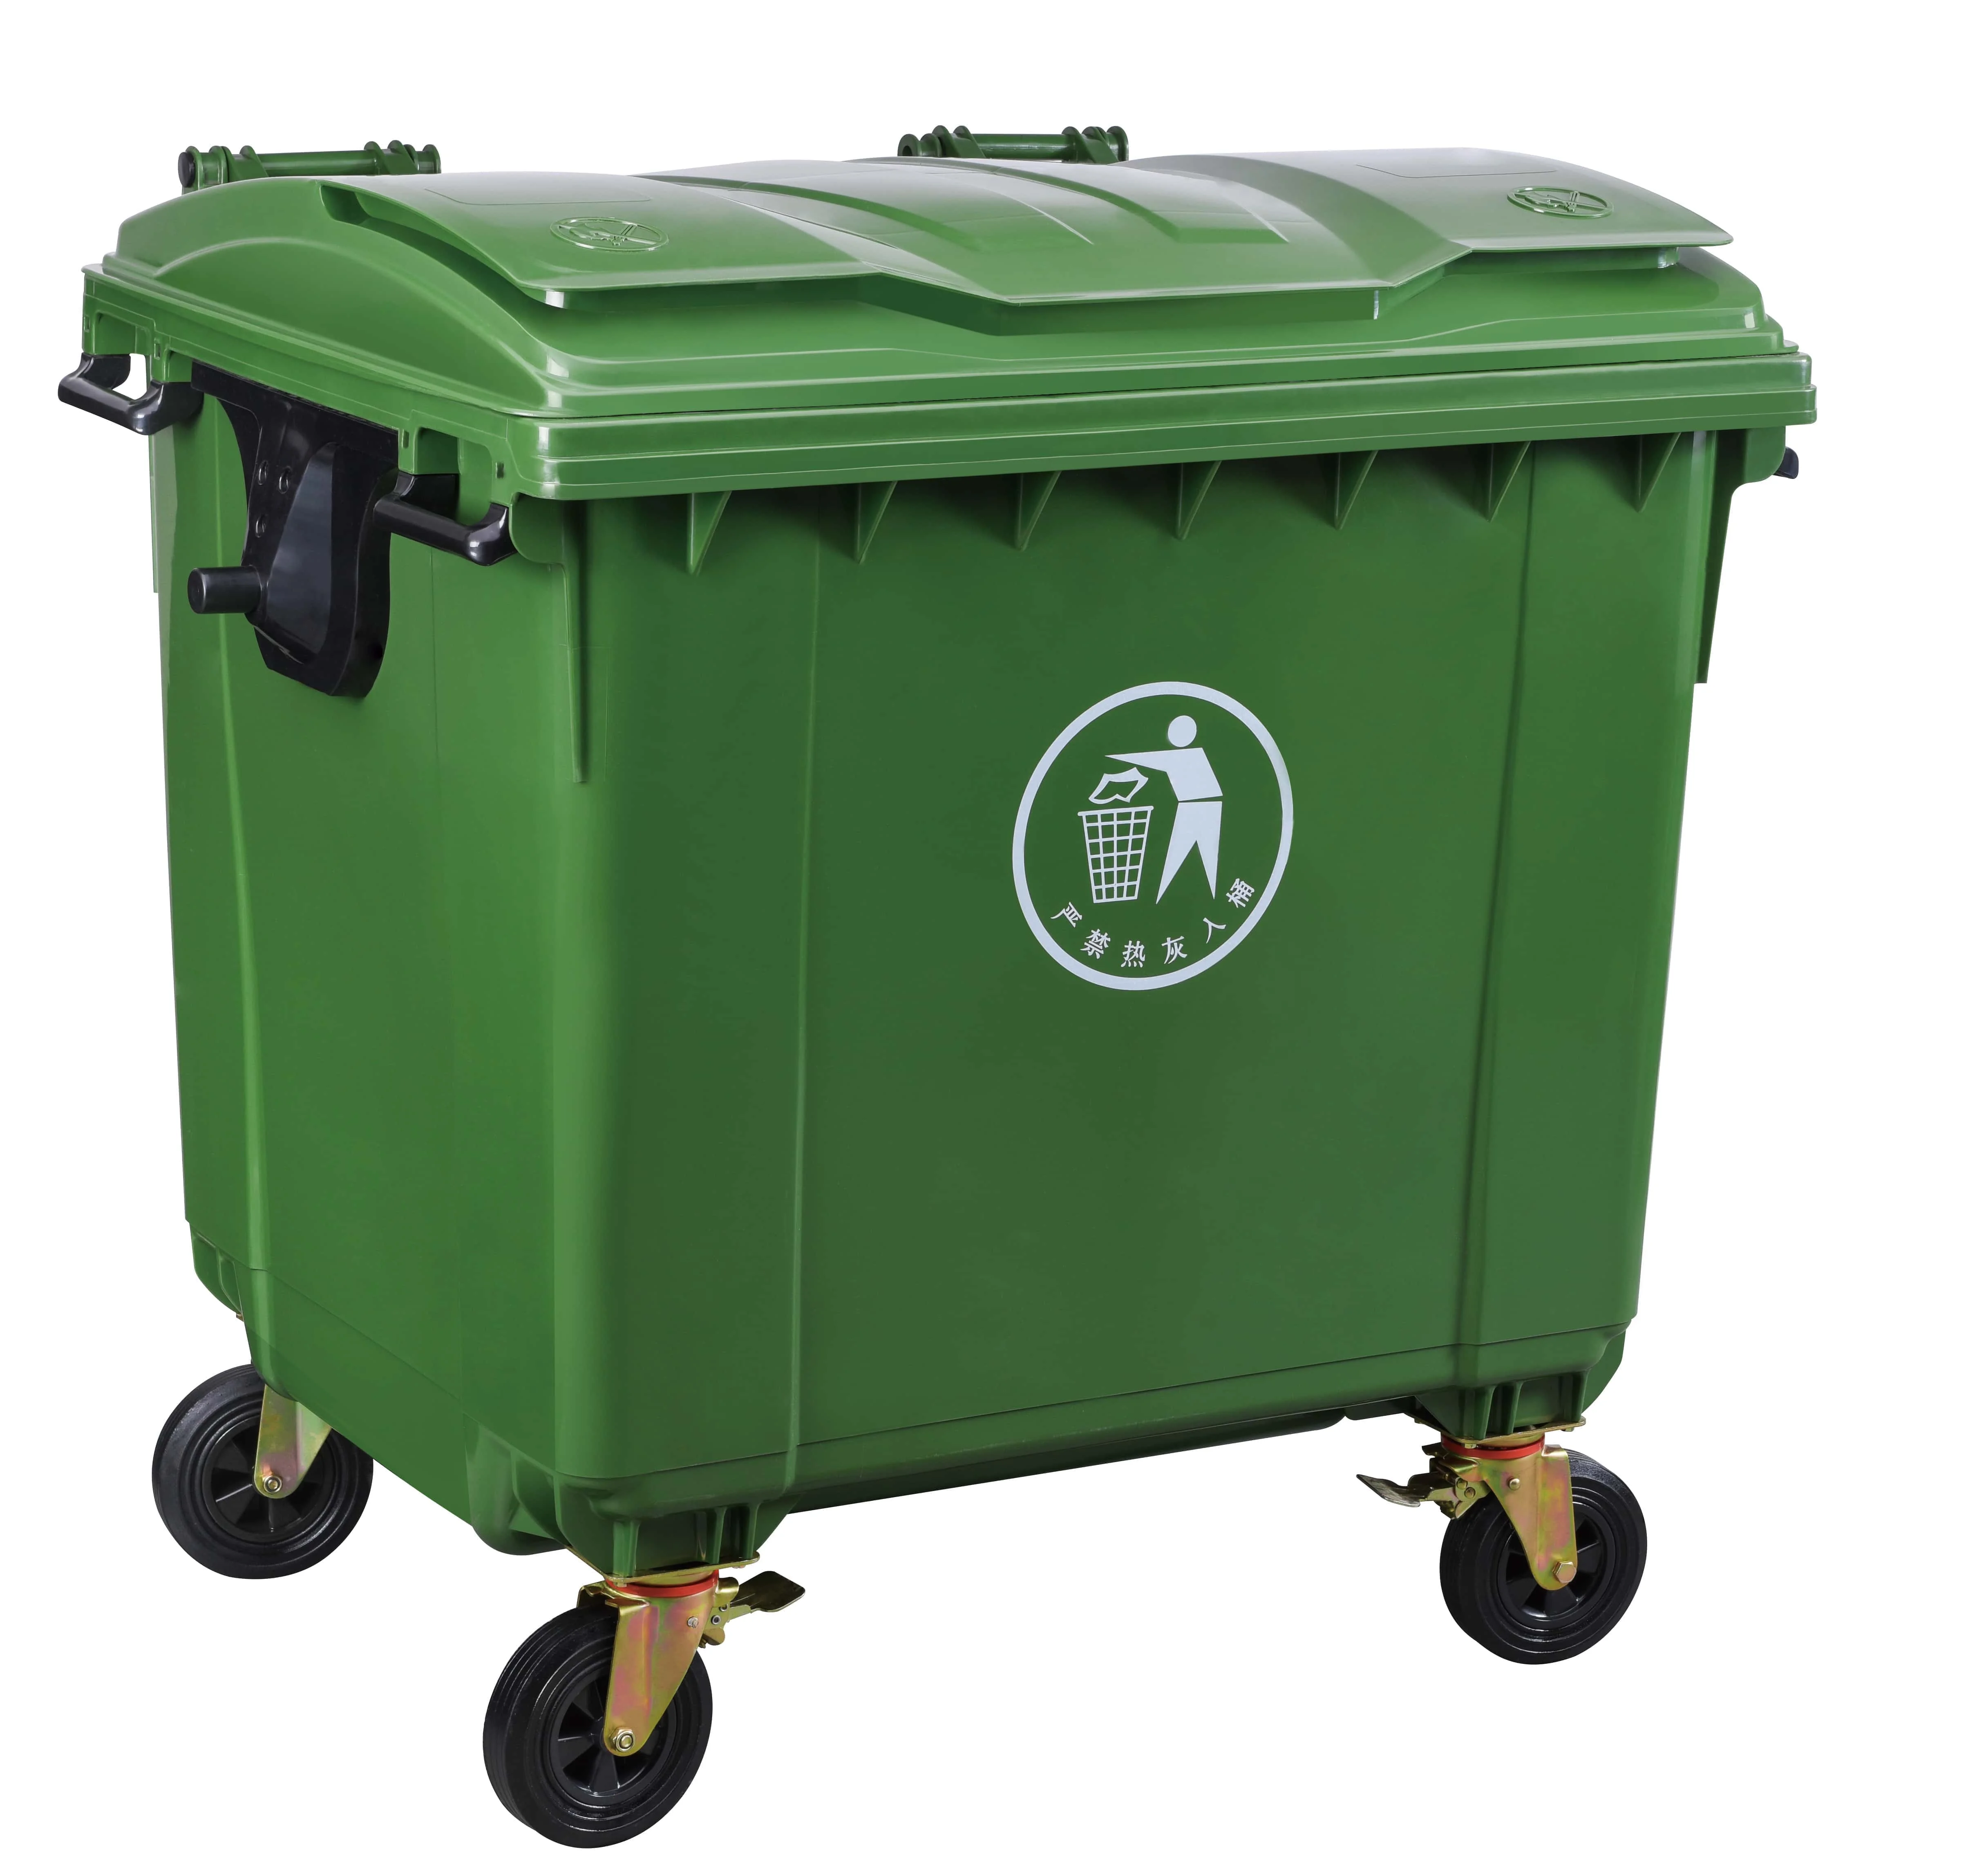 Зеленая мусорка. Мусорный контейнер МКТ-240. Мусорный контейнер 660 литров. En 840-2 мусорный контейнер.